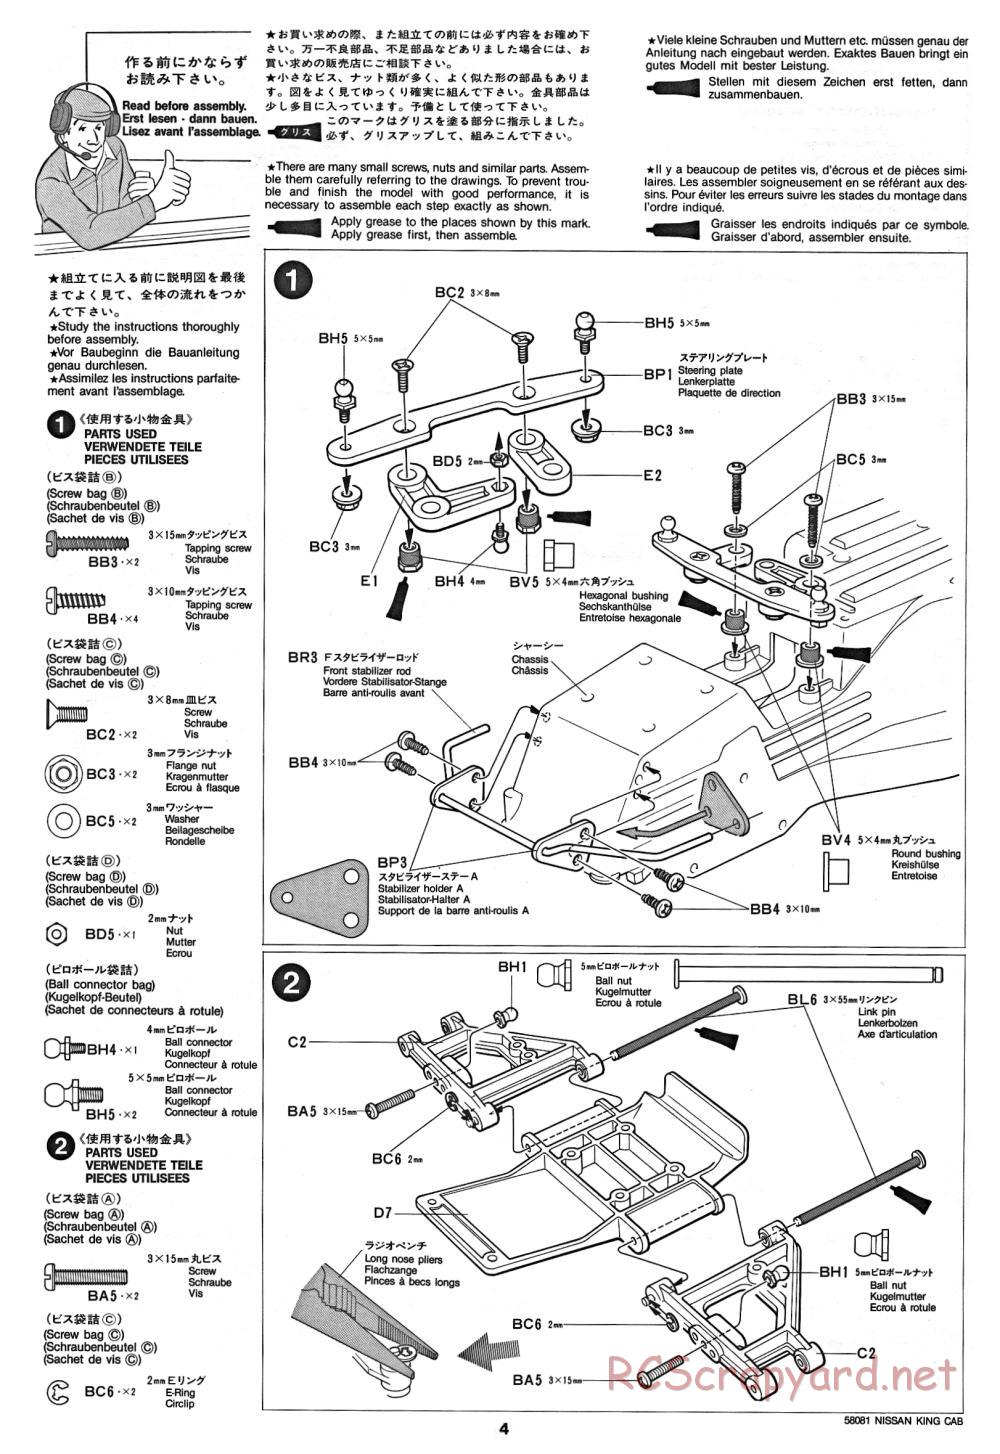 Tamiya - Nissan King Cab - 58081 - Manual - Page 4